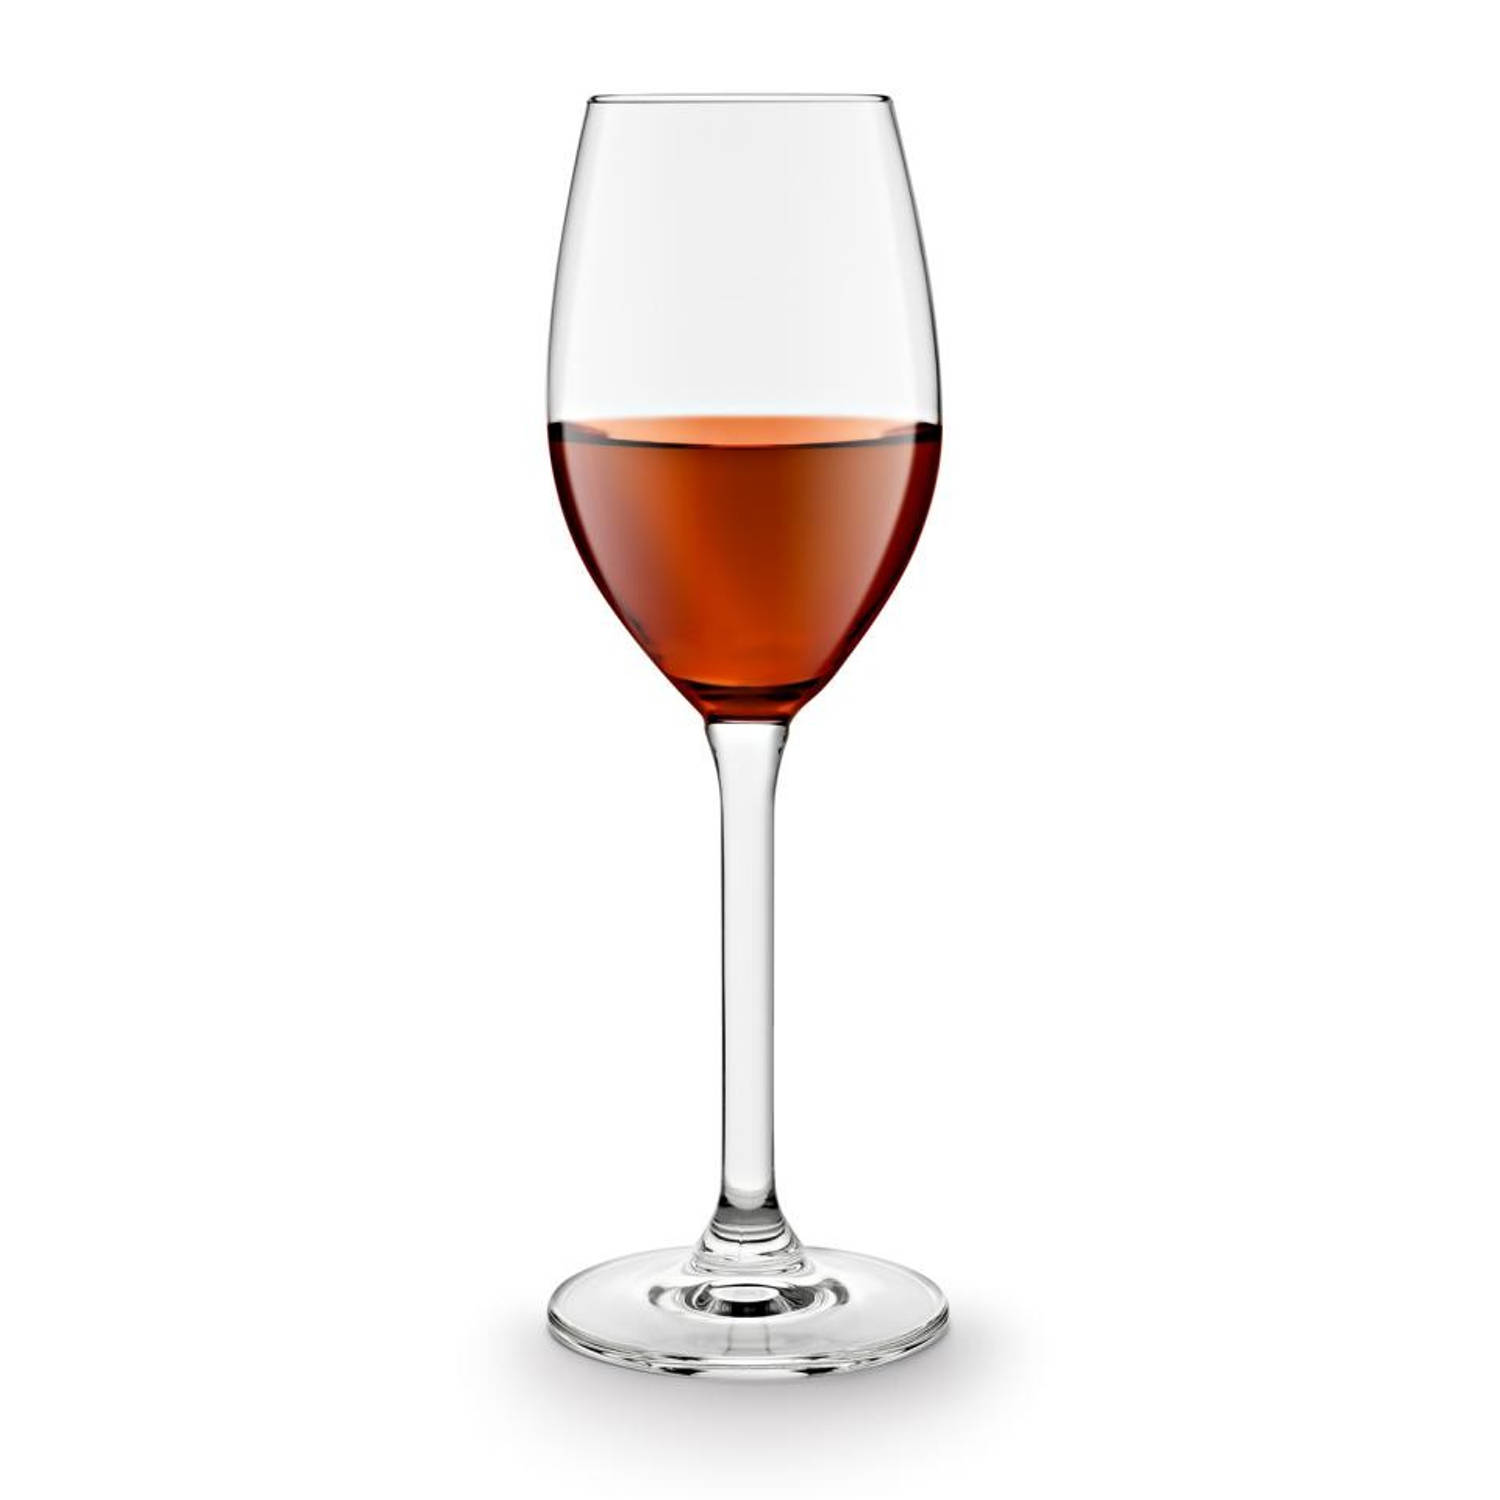 L'Esprit du Vin Port sherryglas - 14 cl - 6 |